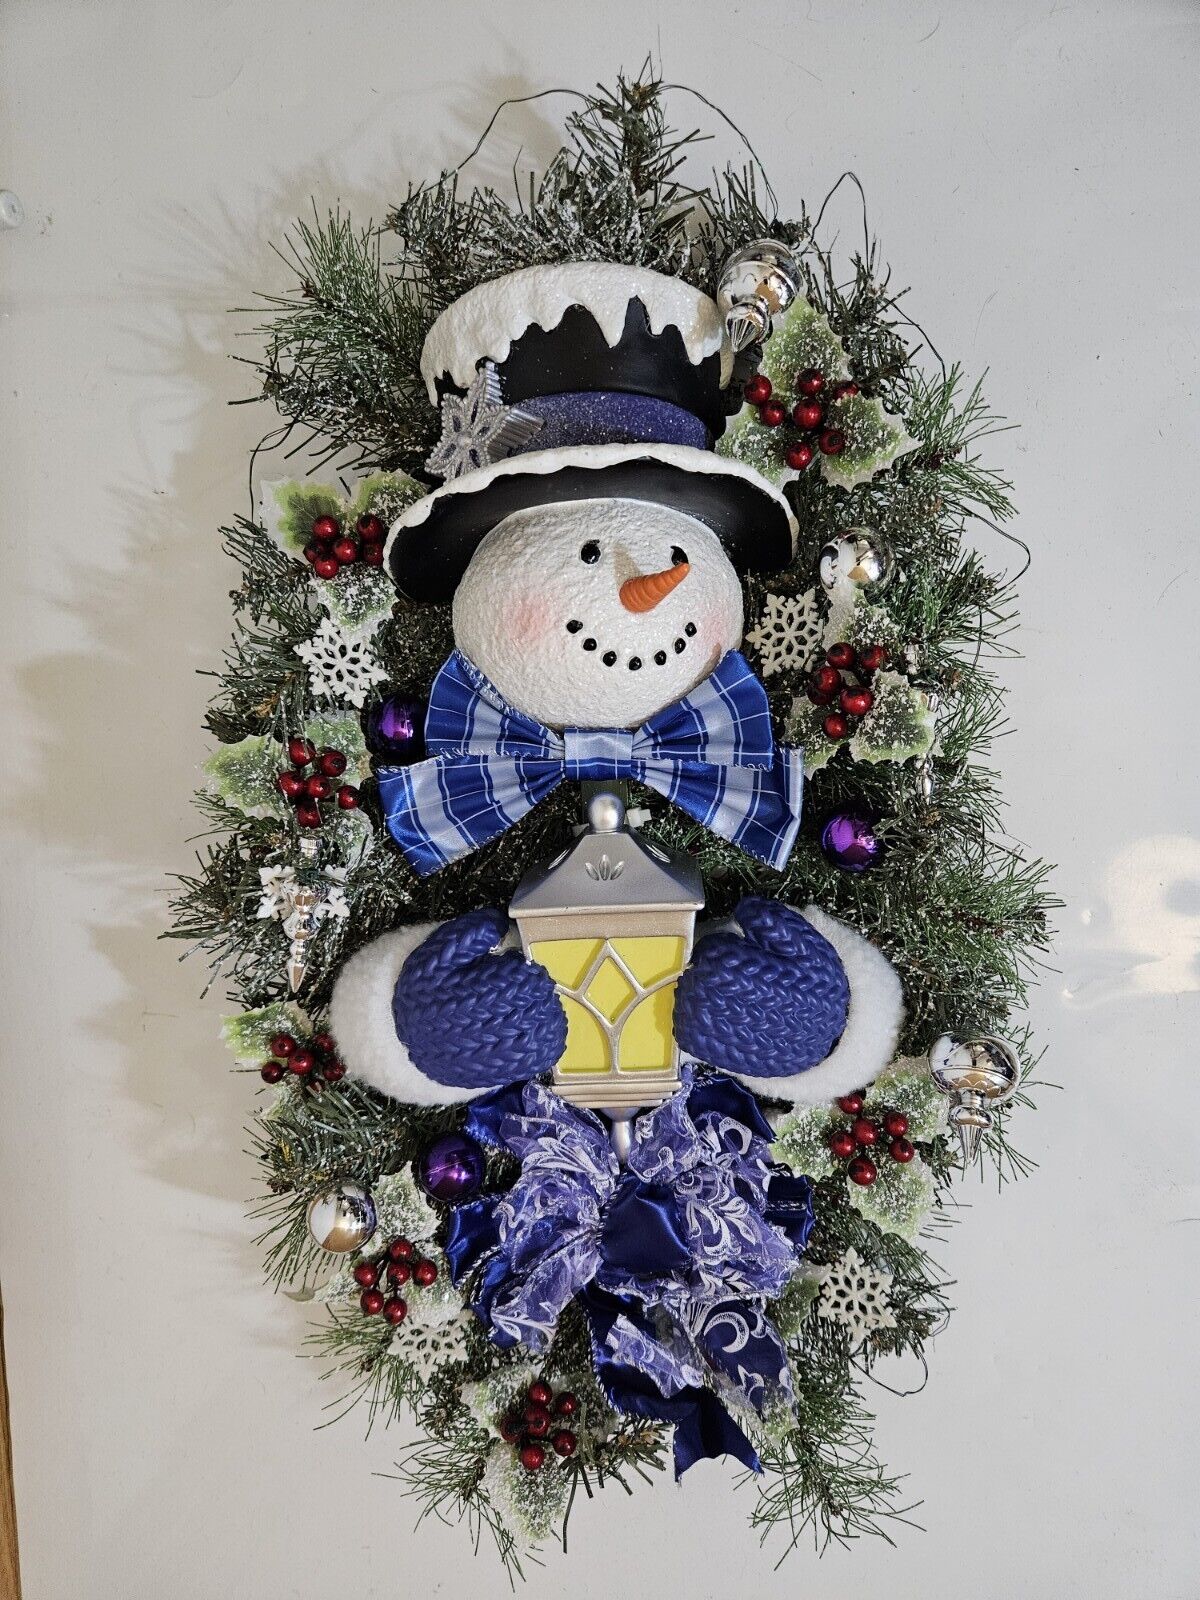 Thomas Kinkade A Warm Winter Welcome Holiday Snowman Wreath Lights Up: 2\' Tall